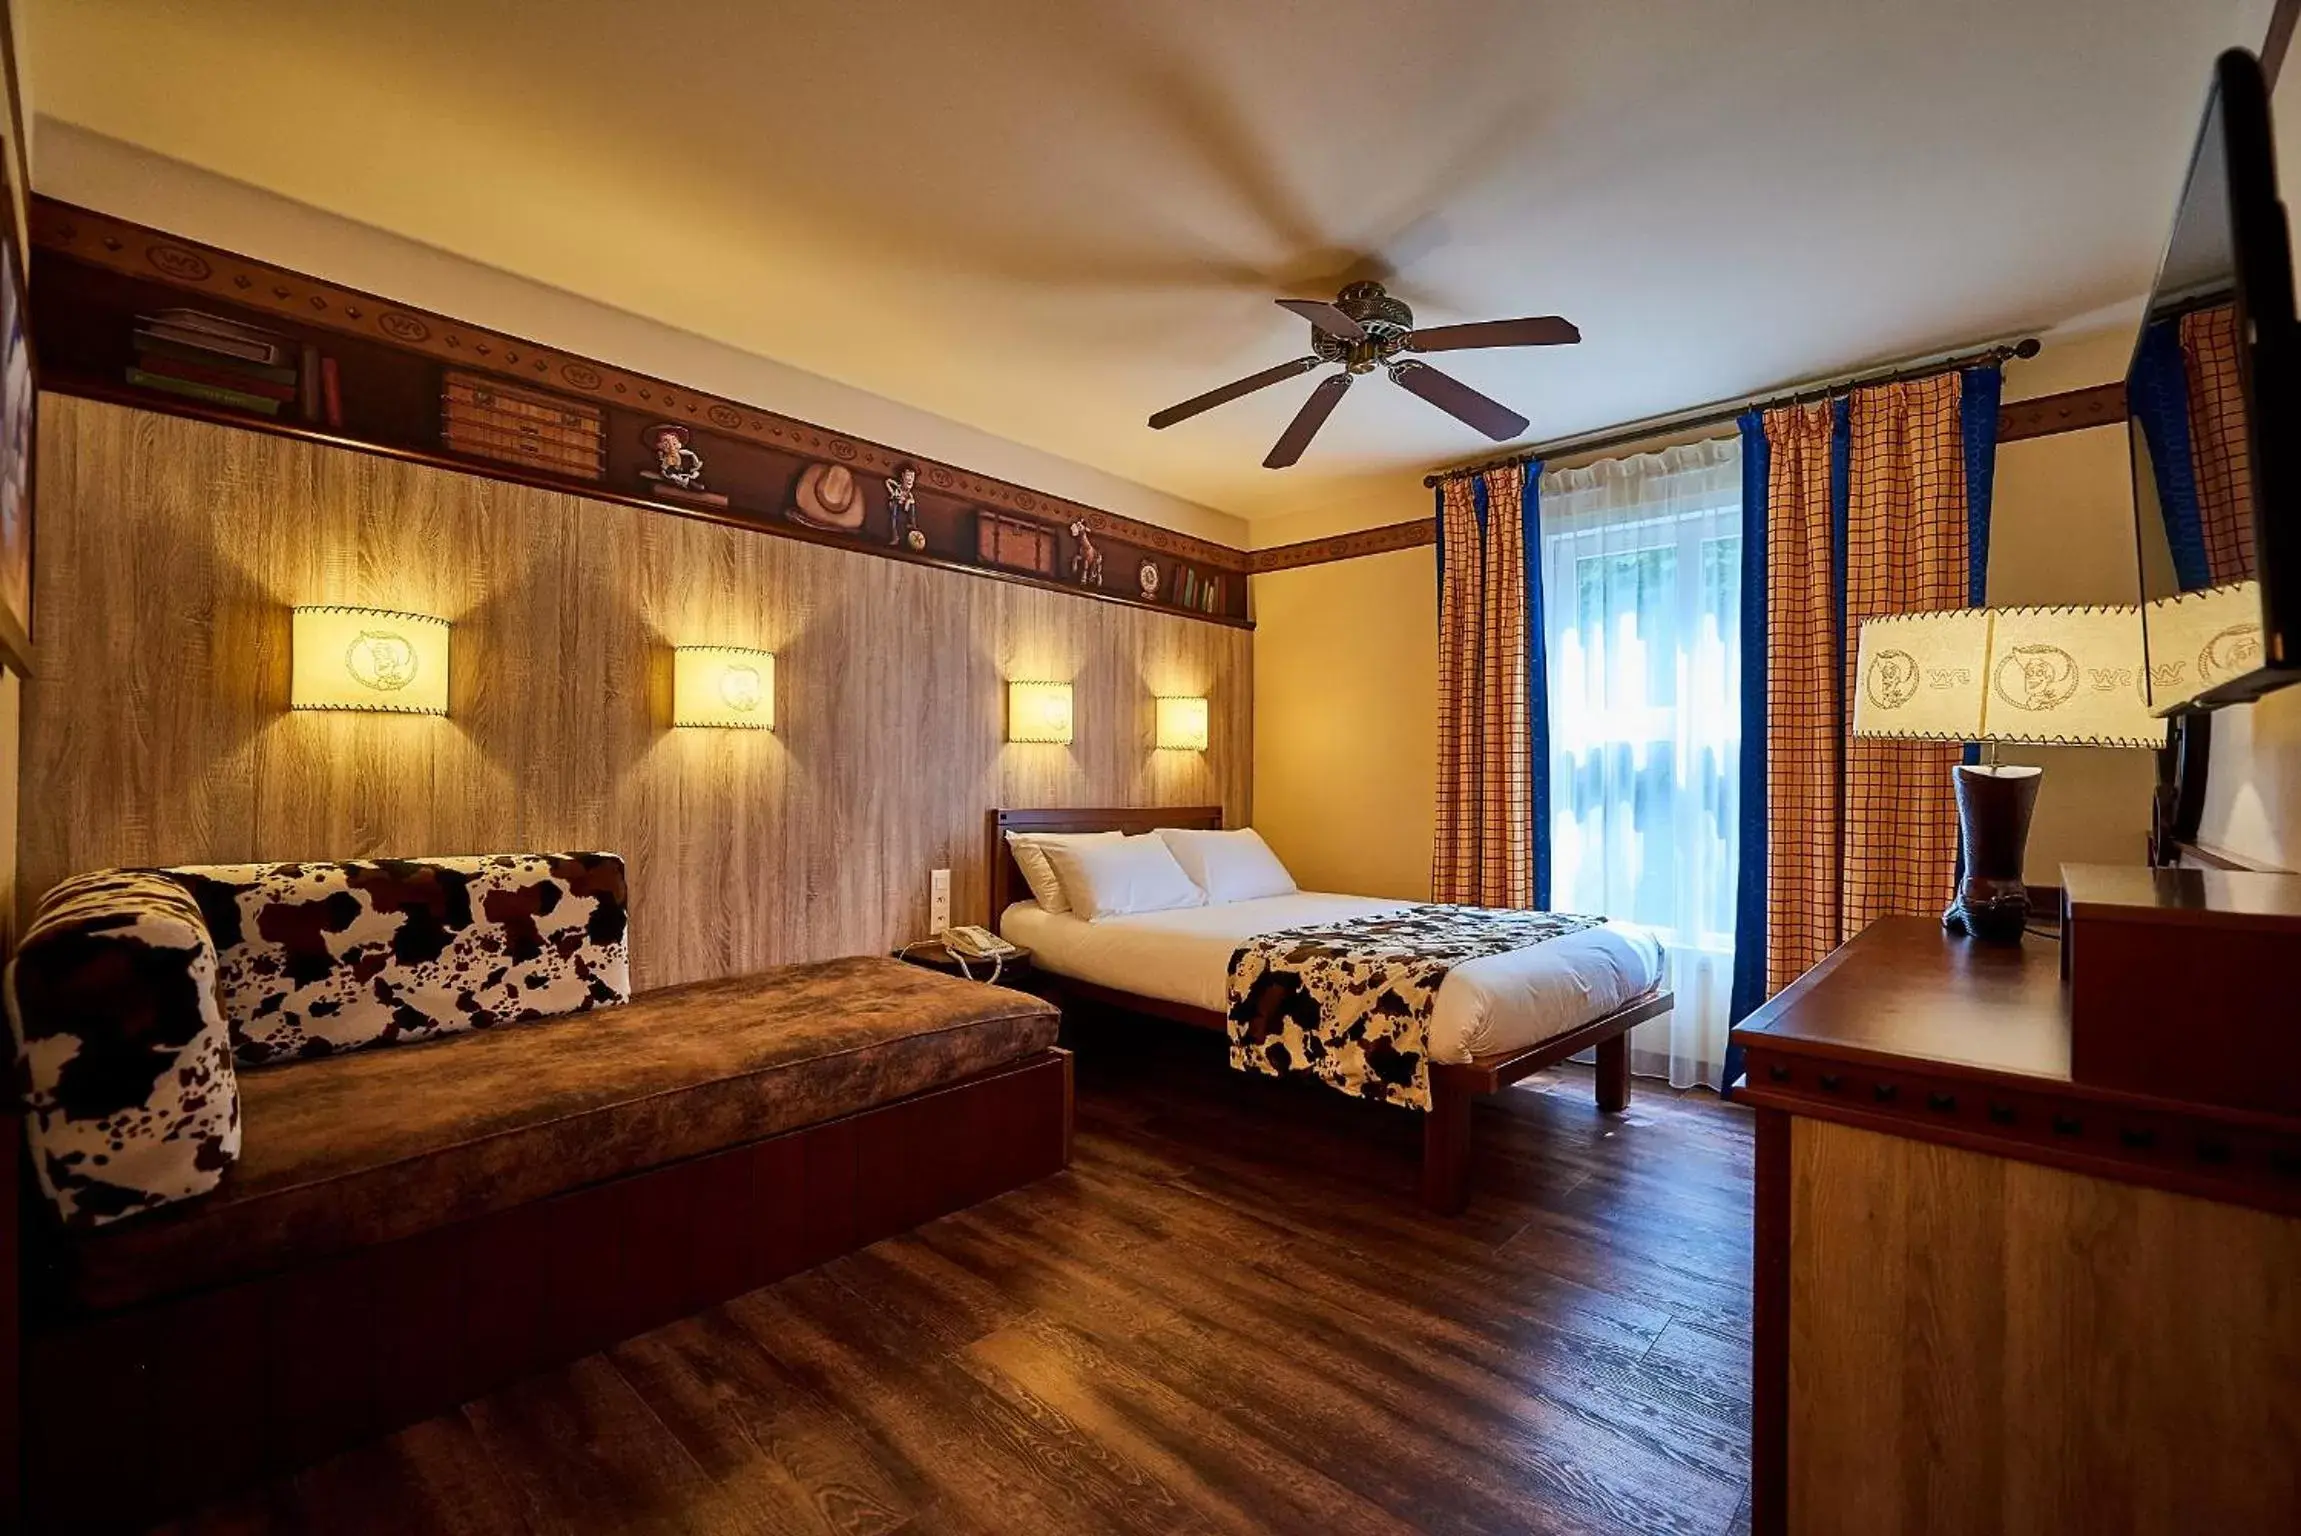 Bedroom in Disney Hotel Cheyenne